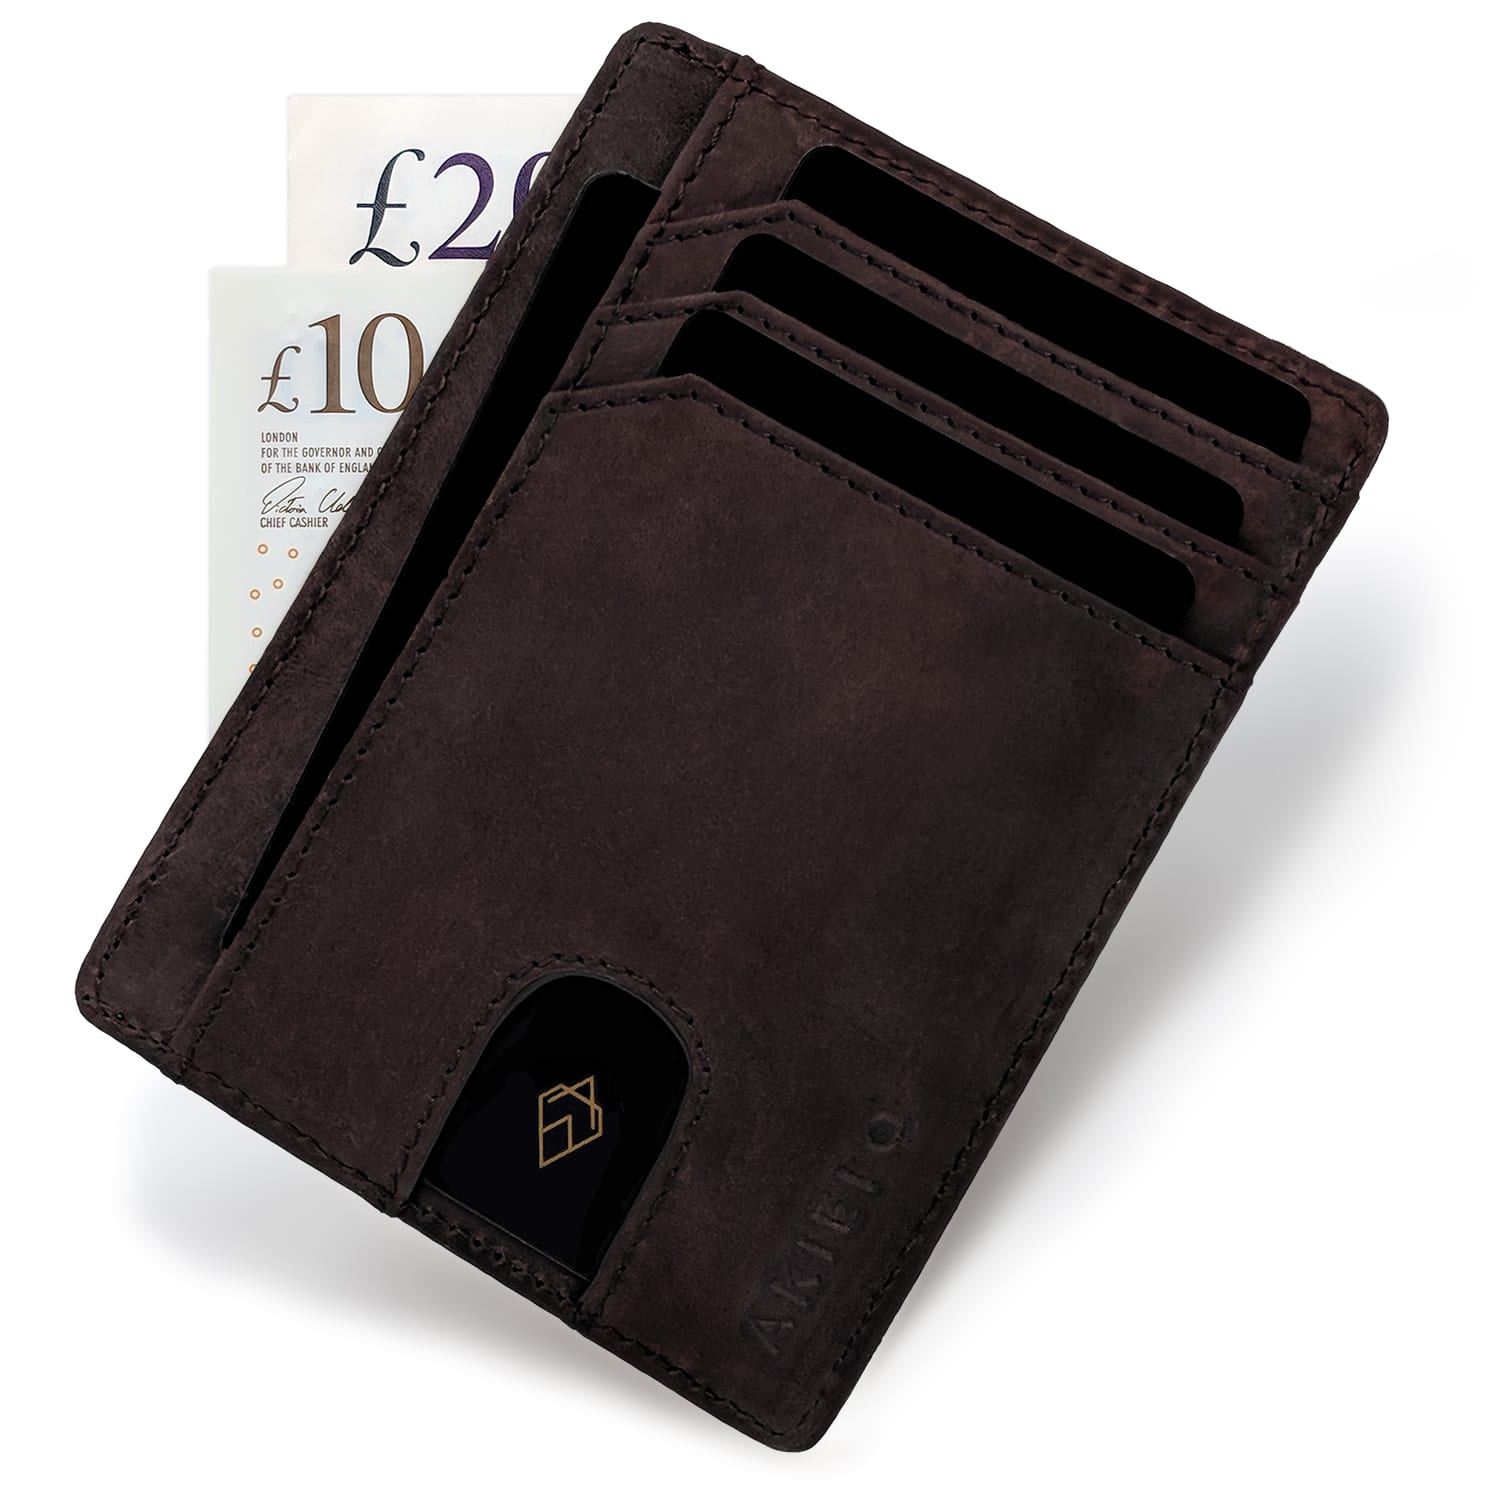 Brown RFID blocking credit card holder wallet minimalist card wallet